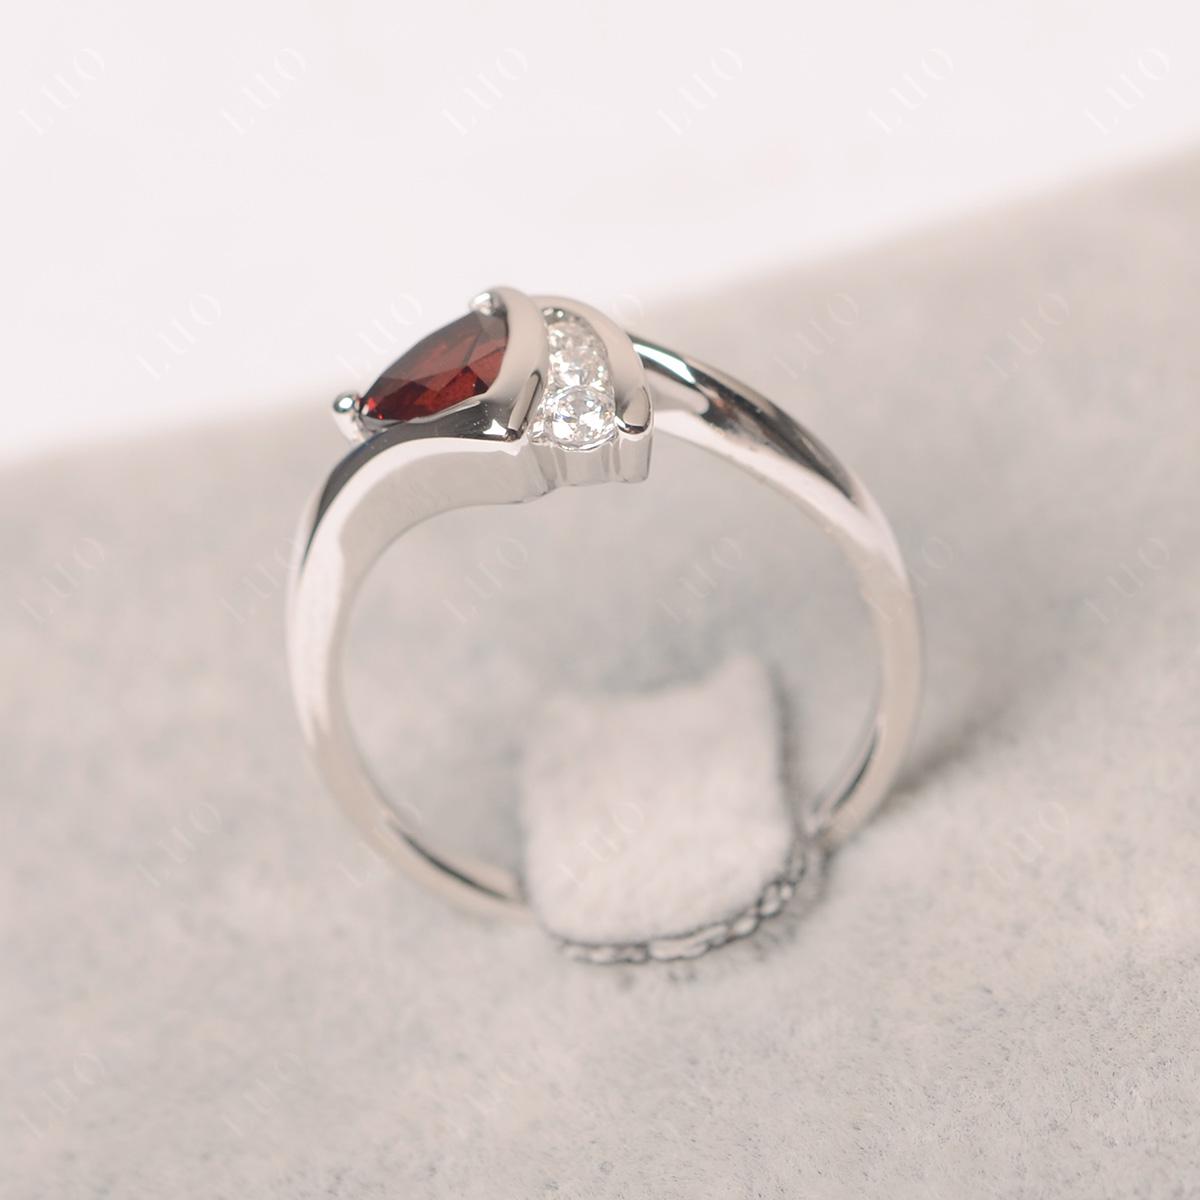 Trillion Cut Garnet Sailboat Inspire Ring - LUO Jewelry